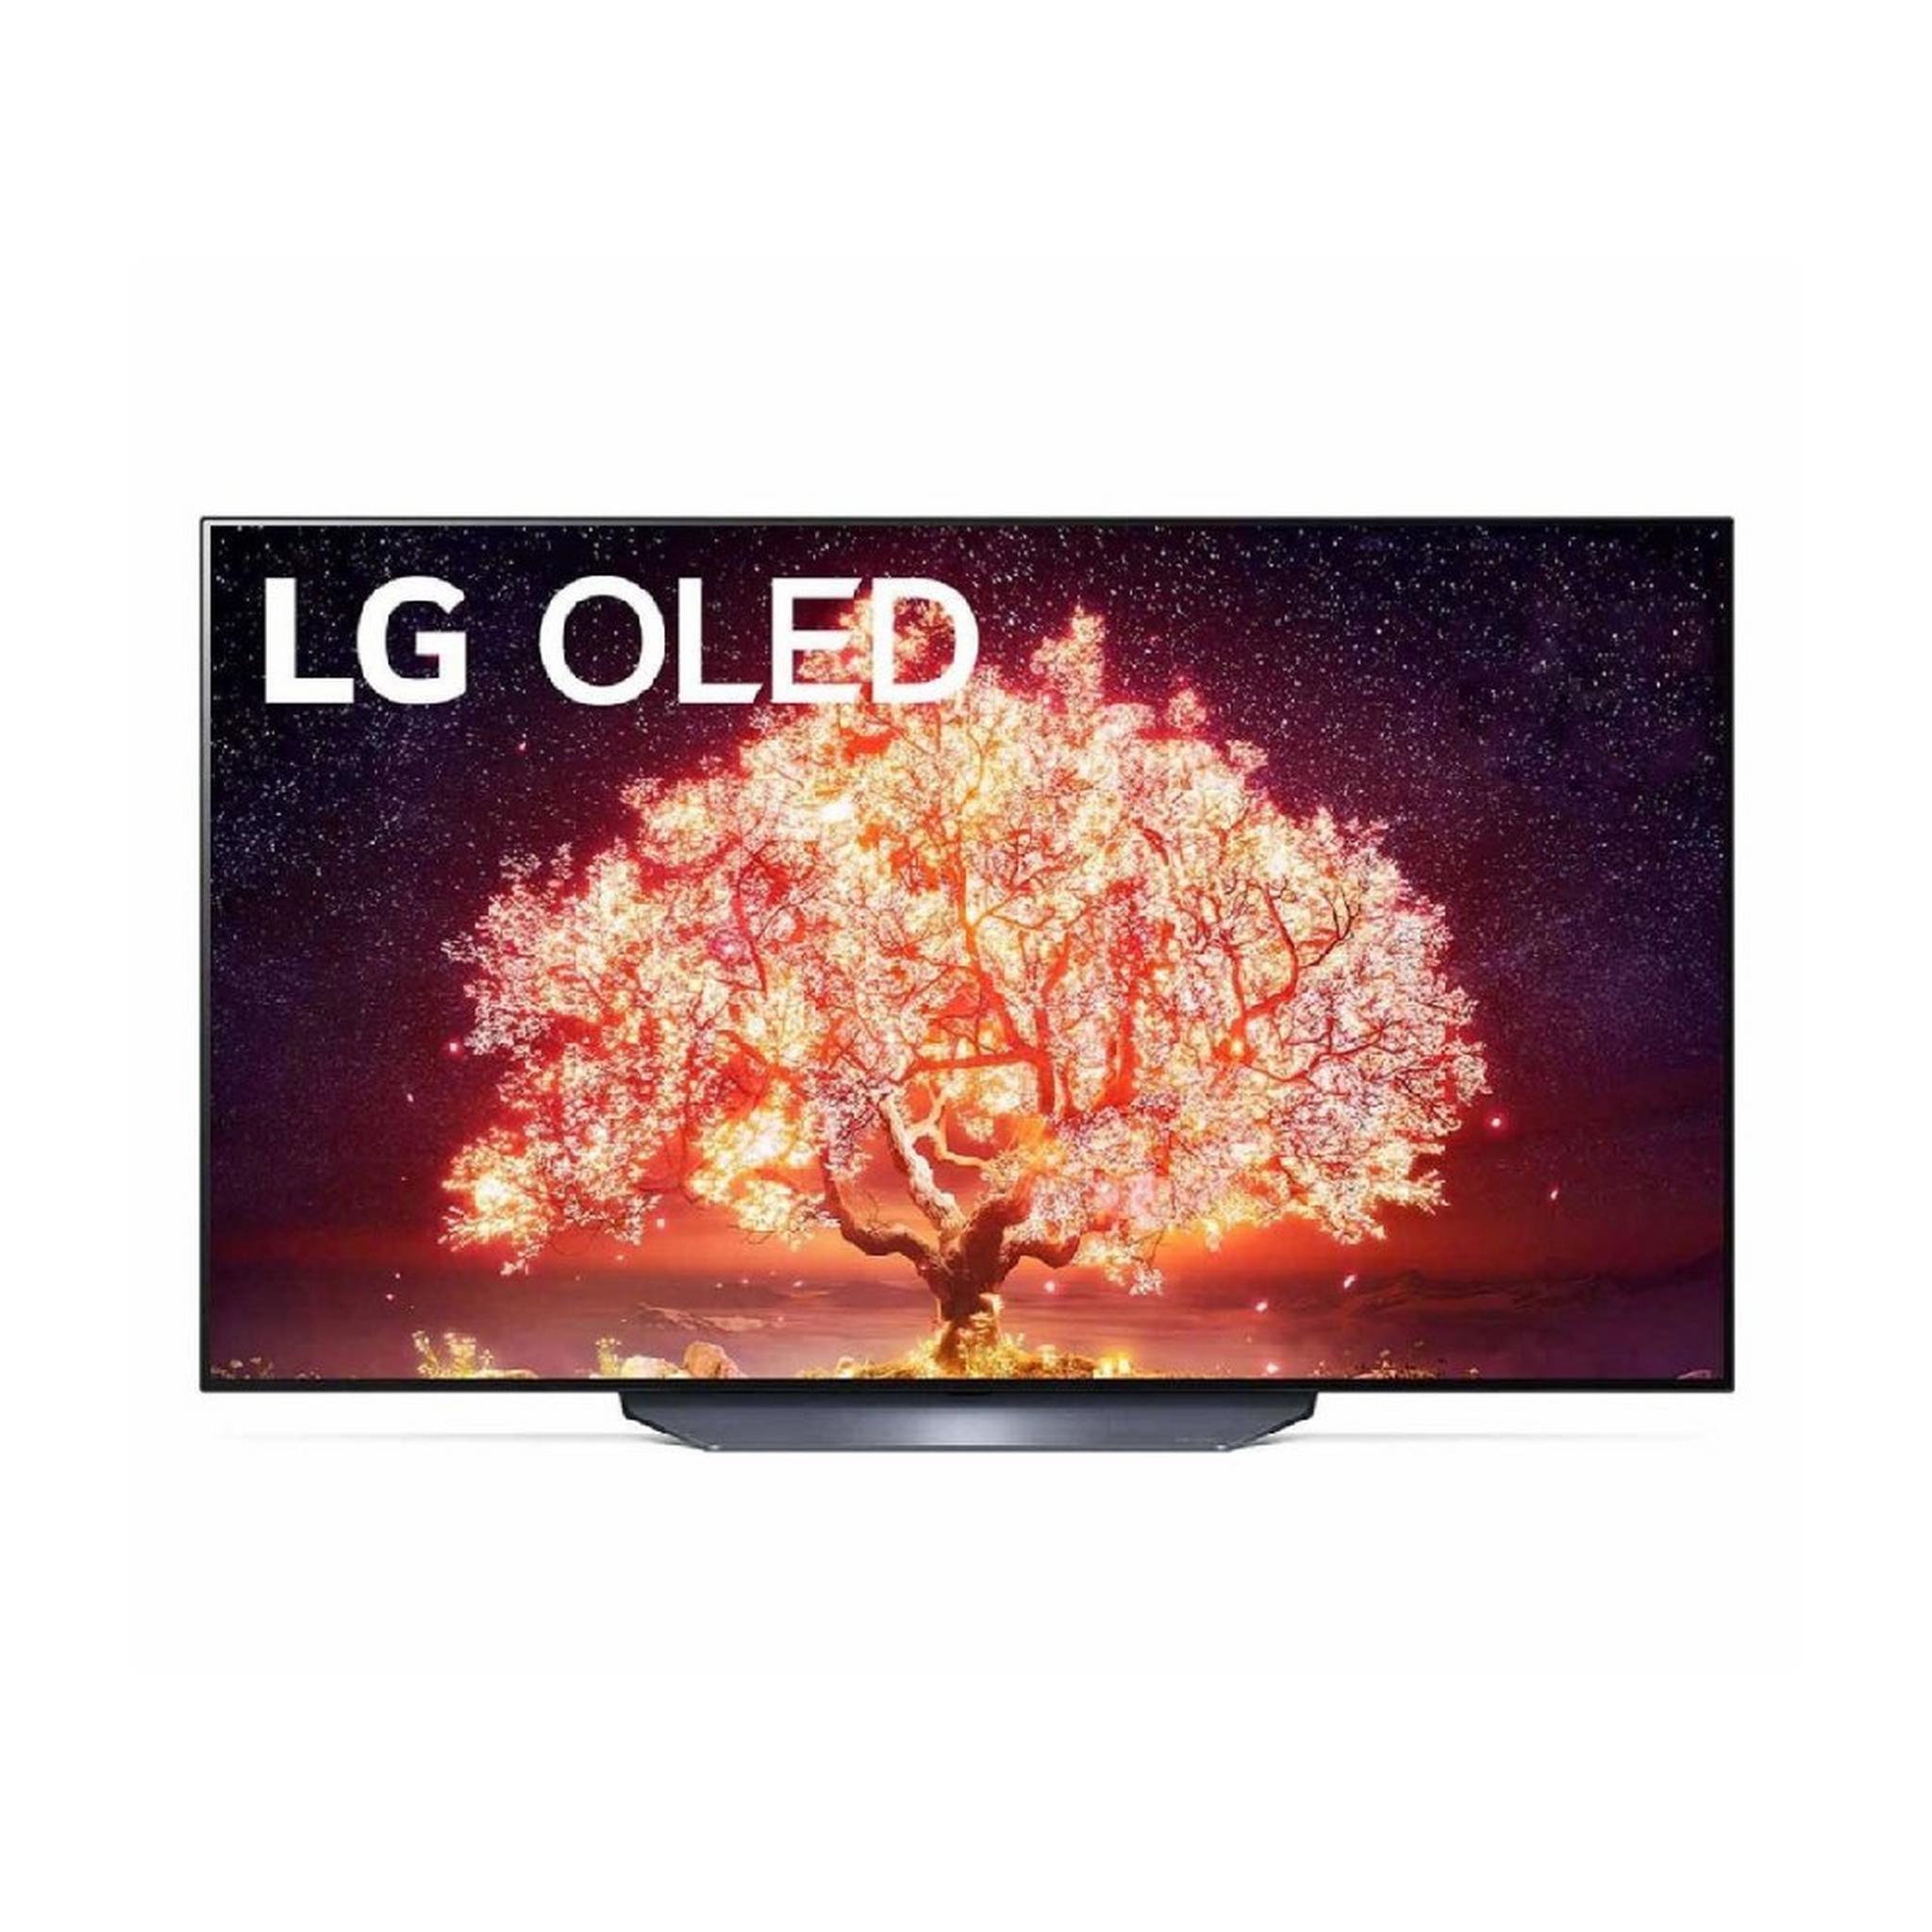 LG 65-inch 4K HDR OLED Smart TV, OLED65B1 - Silver